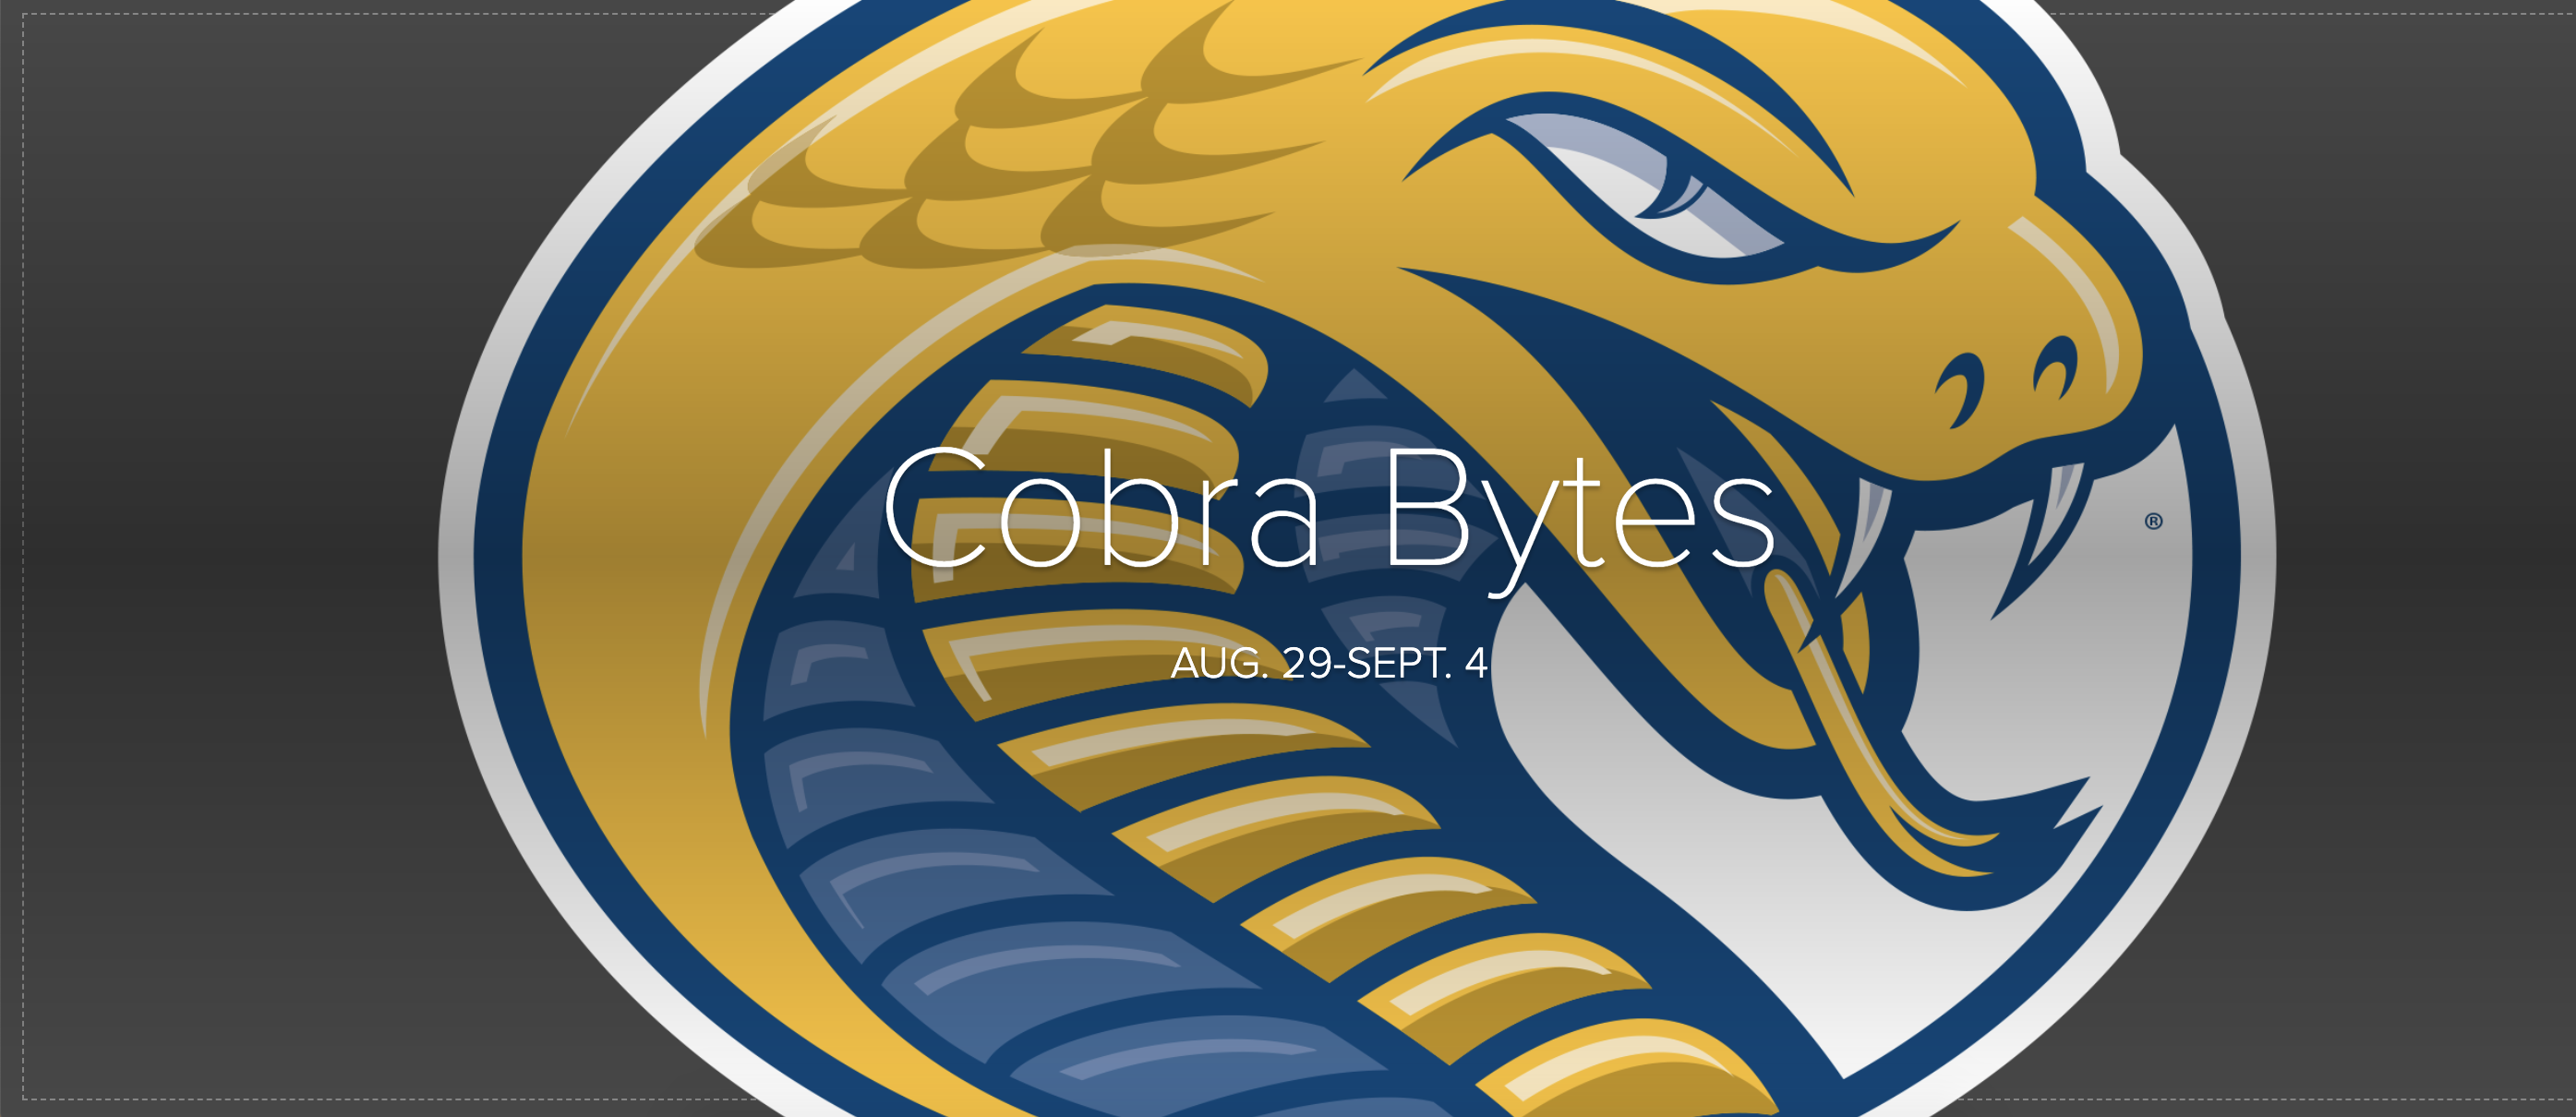 Cobra Bytes Aug. 29-Sept. 4